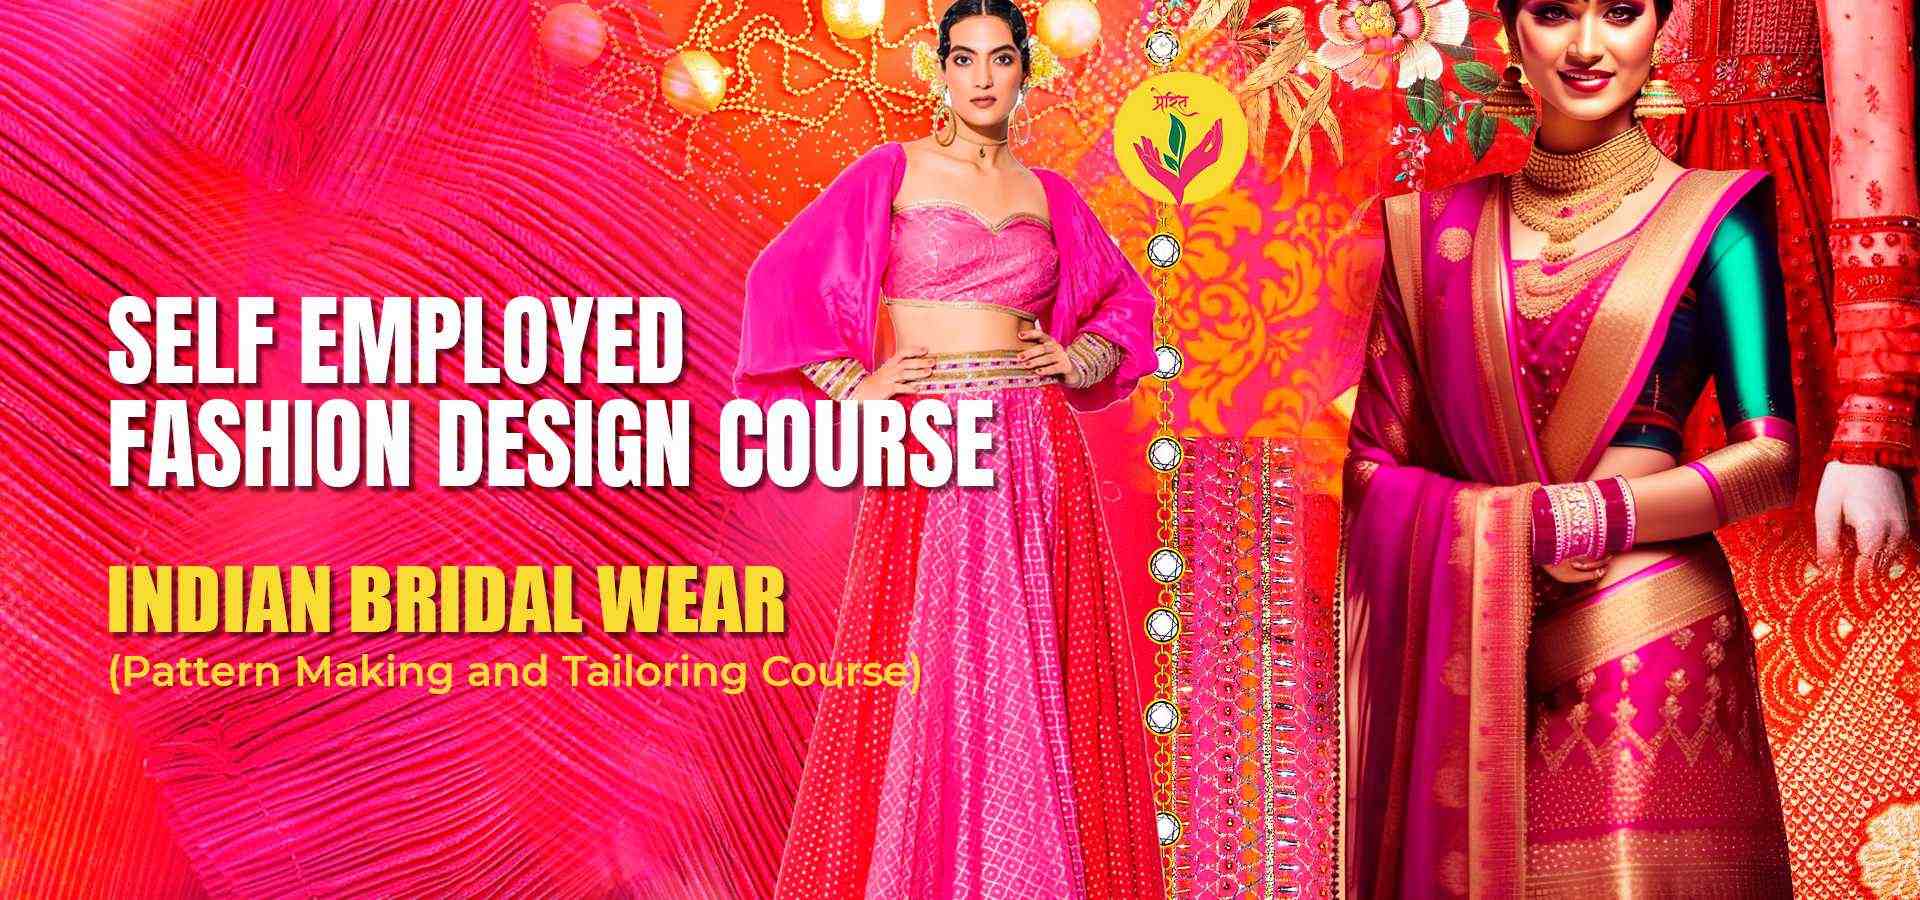 Self-Employed Fashion Design Course